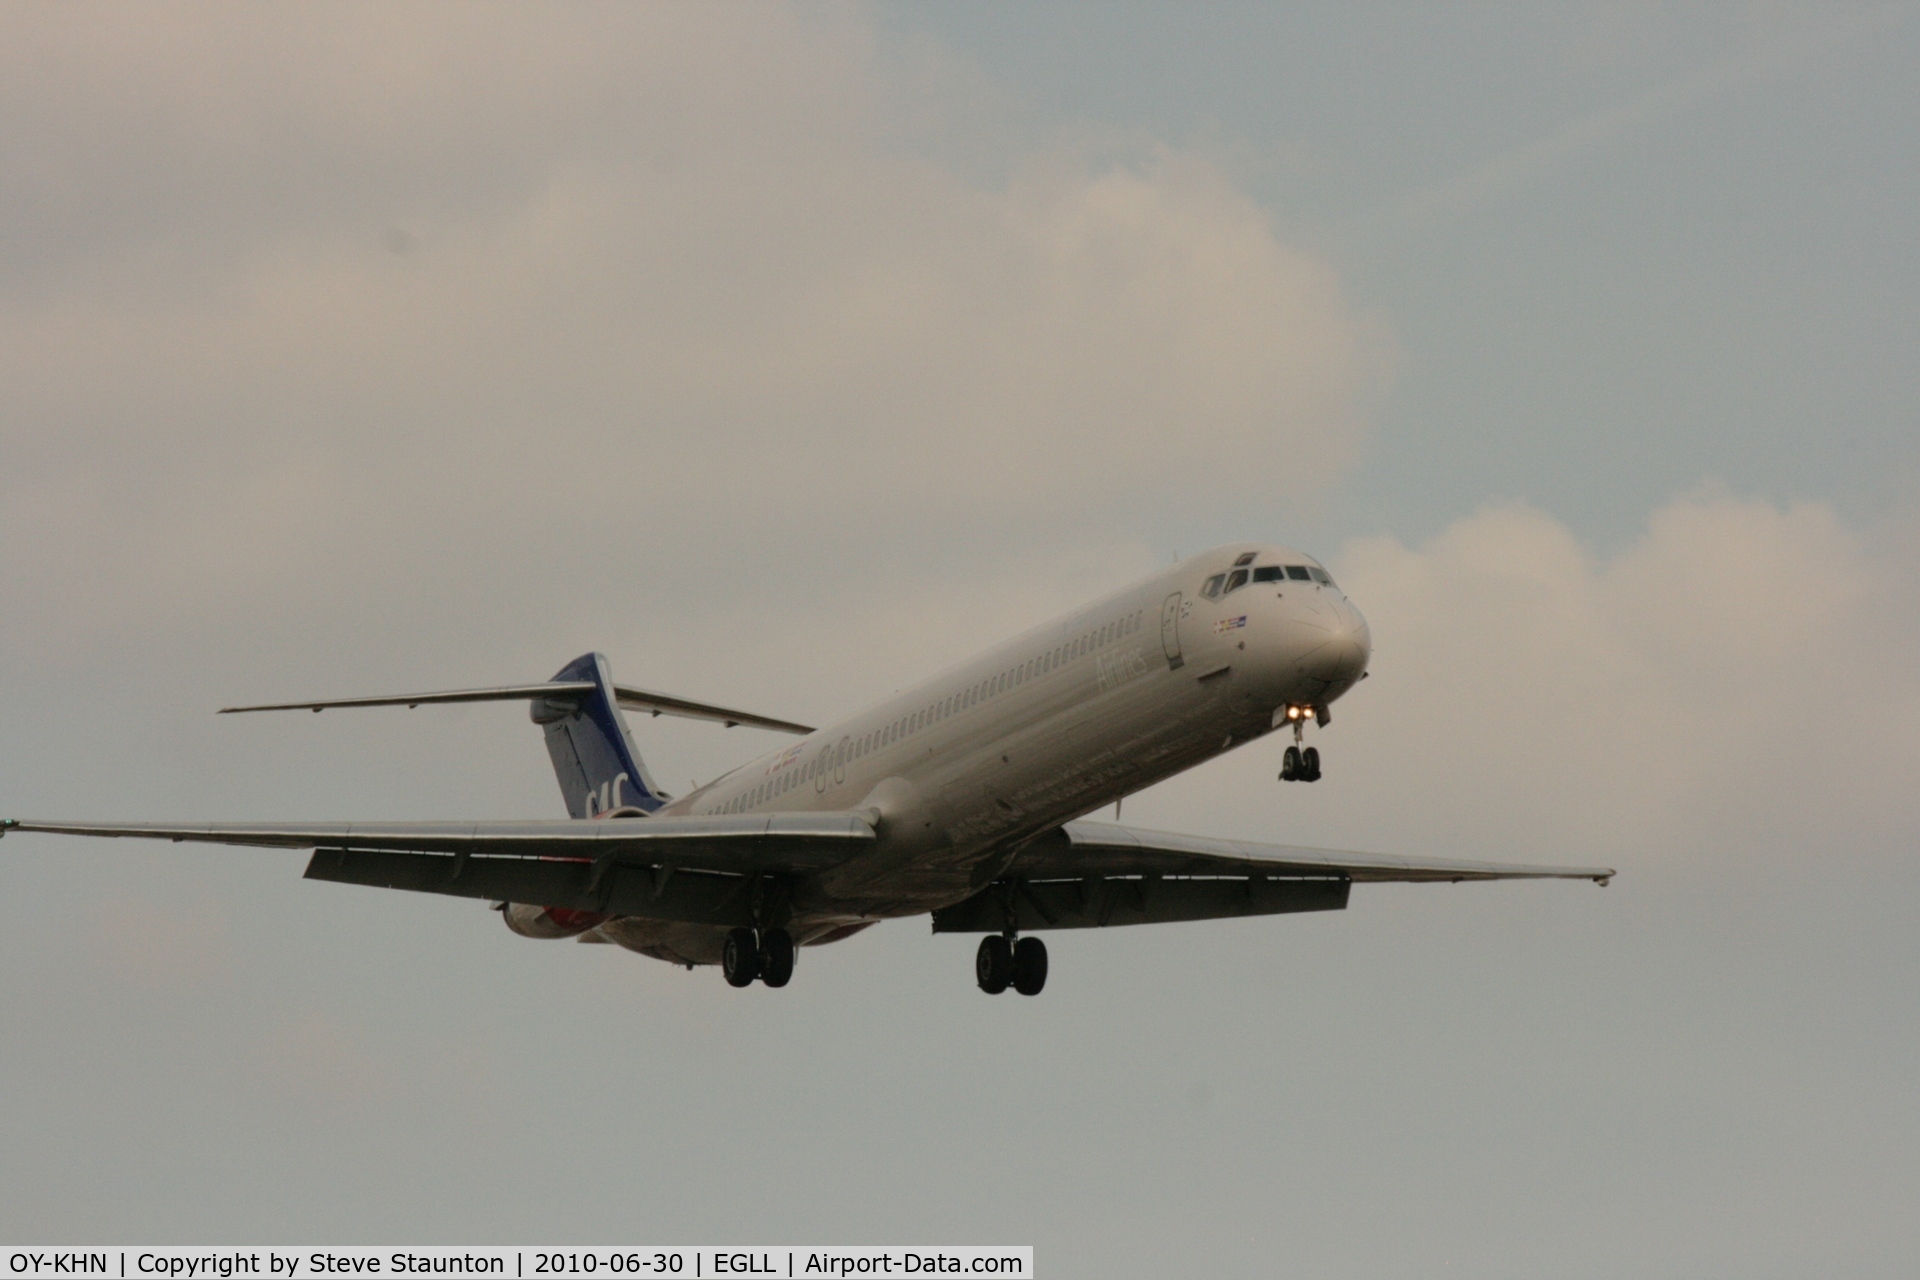 OY-KHN, 1991 McDonnell Douglas MD-82 (DC-9-82) C/N 53000, Taken at Heathrow Airport, June 2010